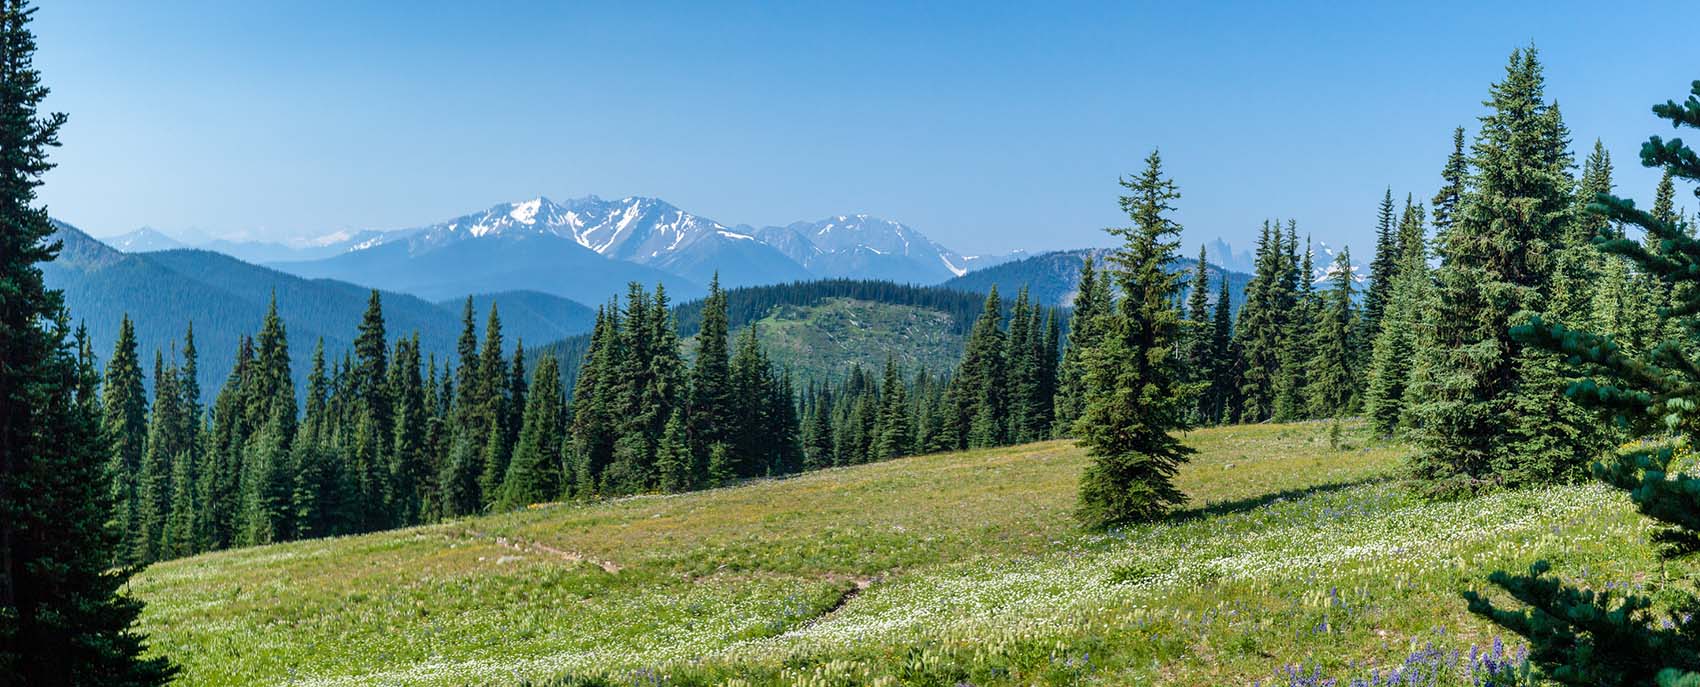 Mountain landscape, Manning Park, British Columbia, Canada